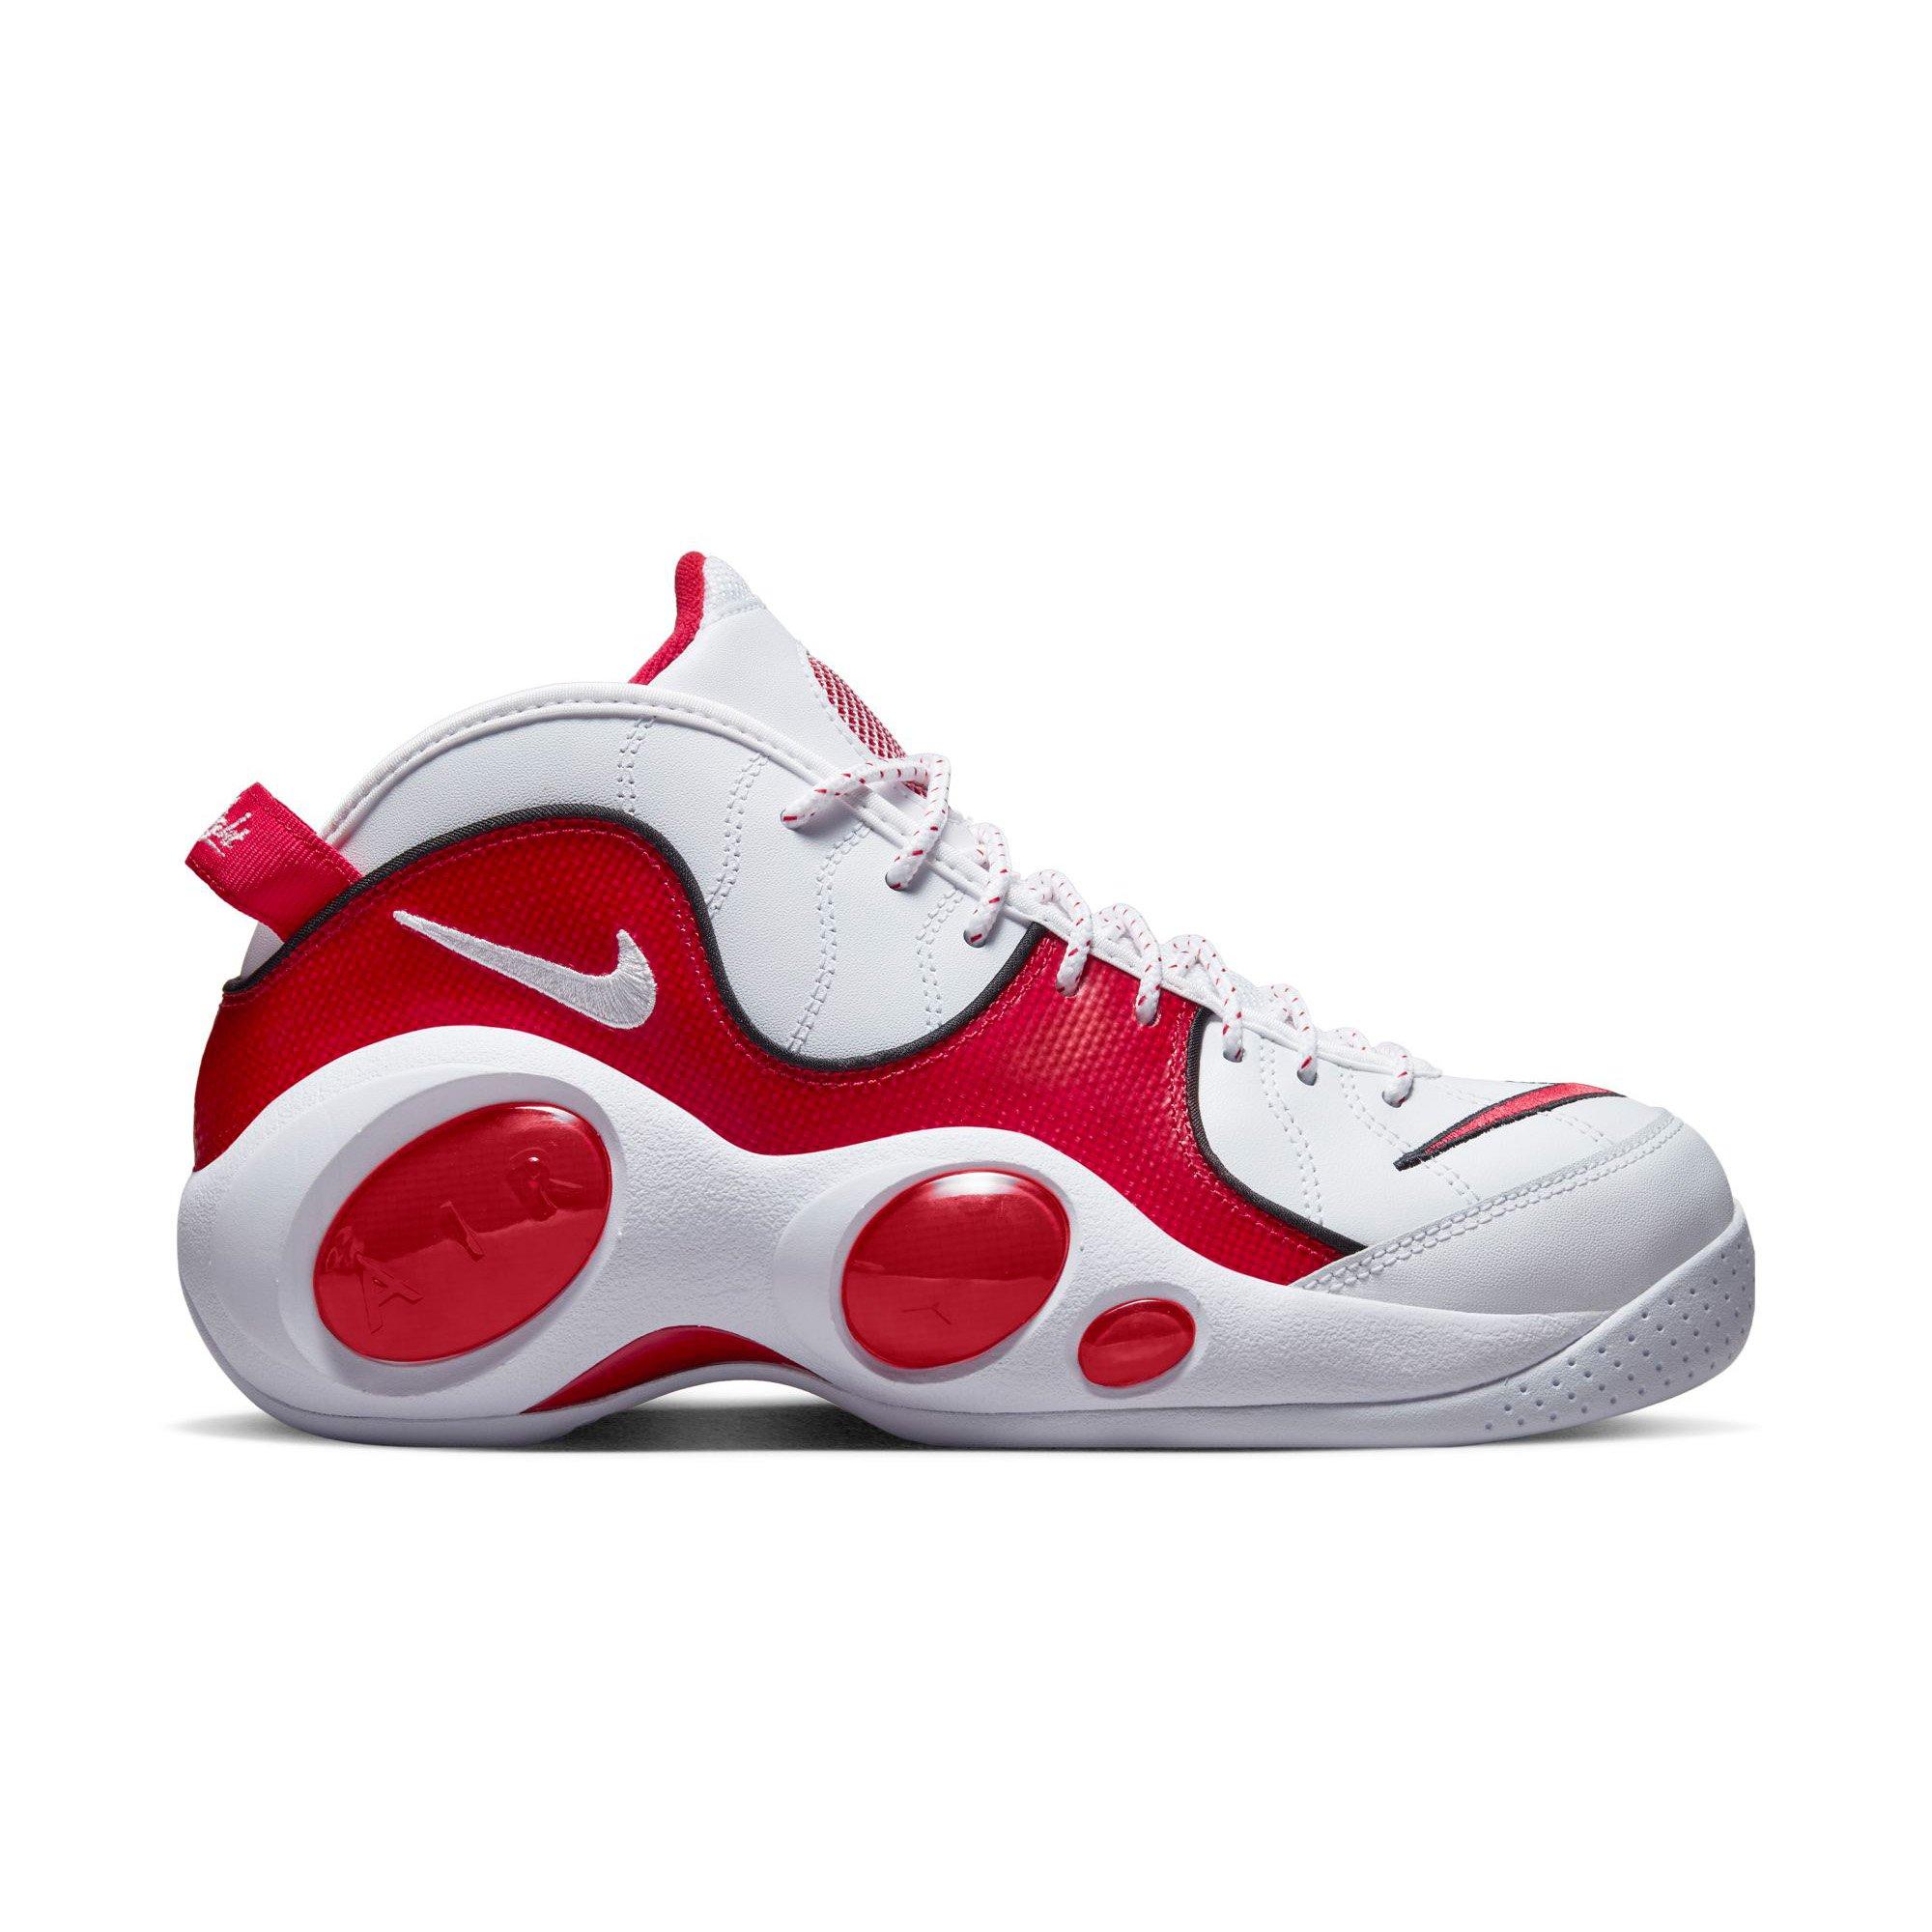 Nike Air Zoom Flight 95 "White/True Men's Shoe